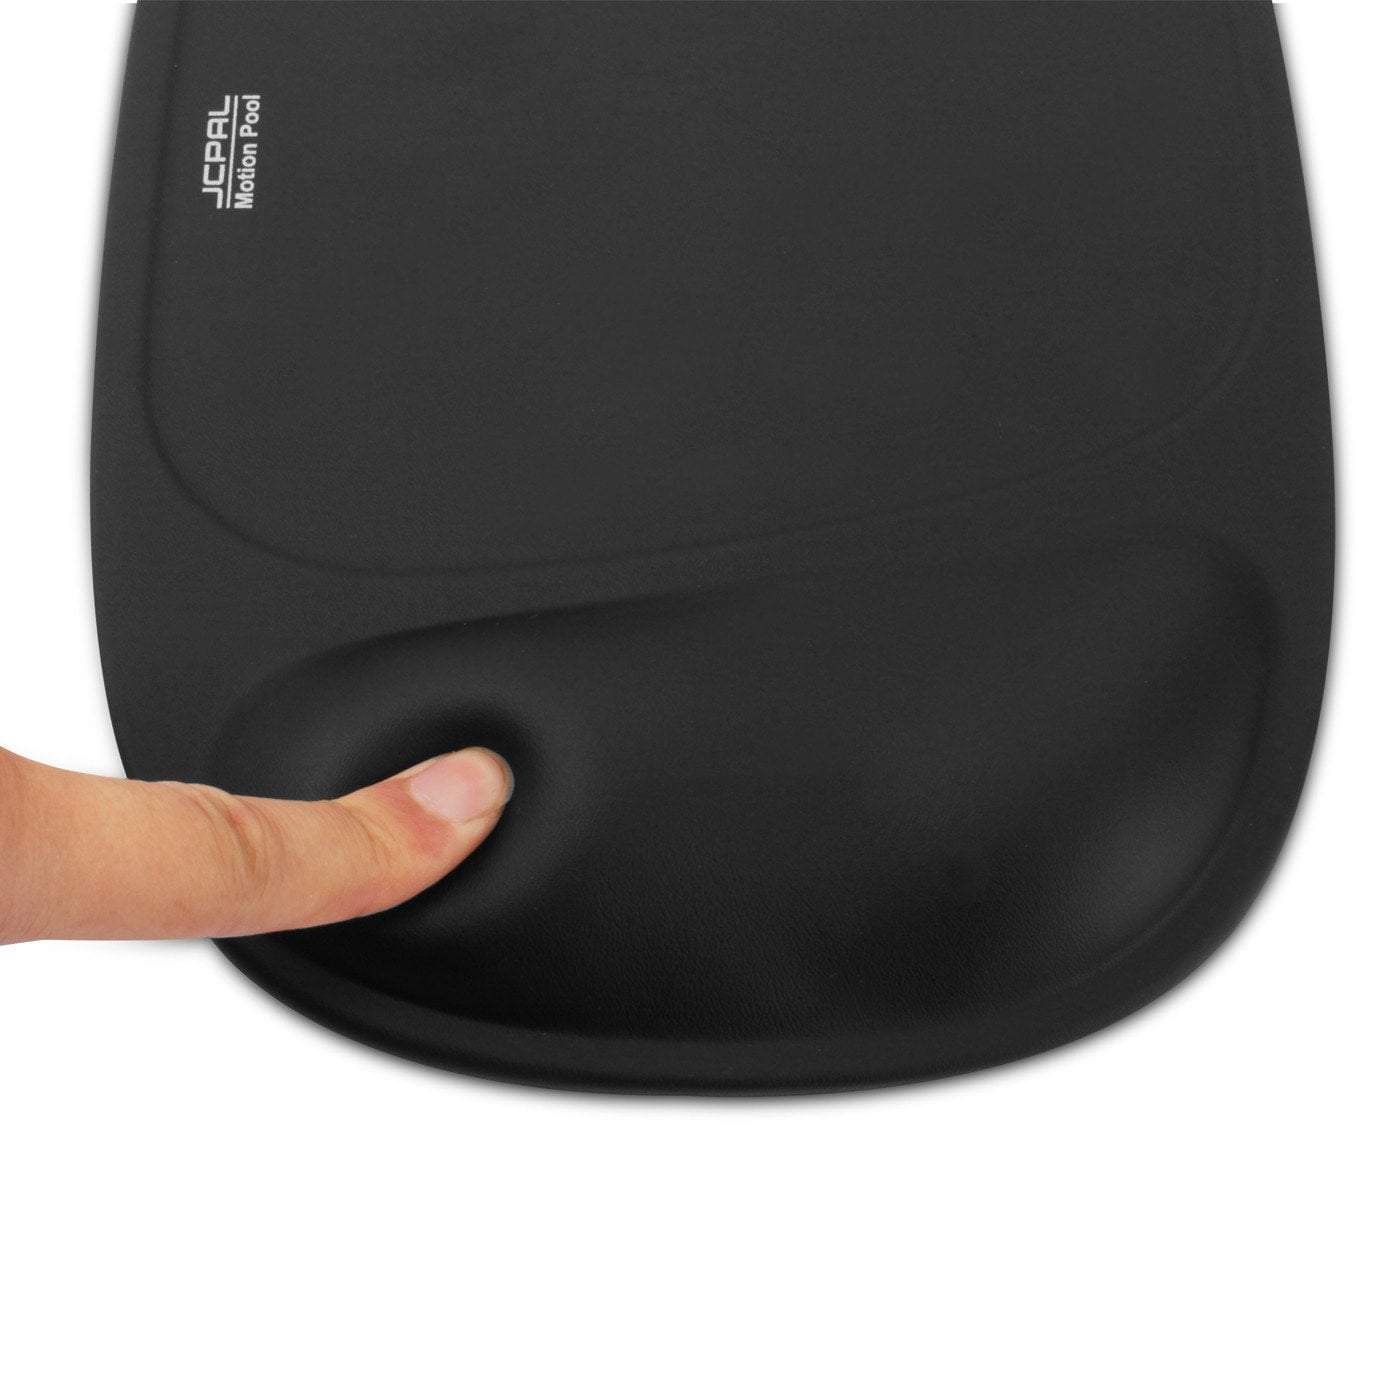 JCPal Accessories ComforPad Ergonomic Mouse Pad Black